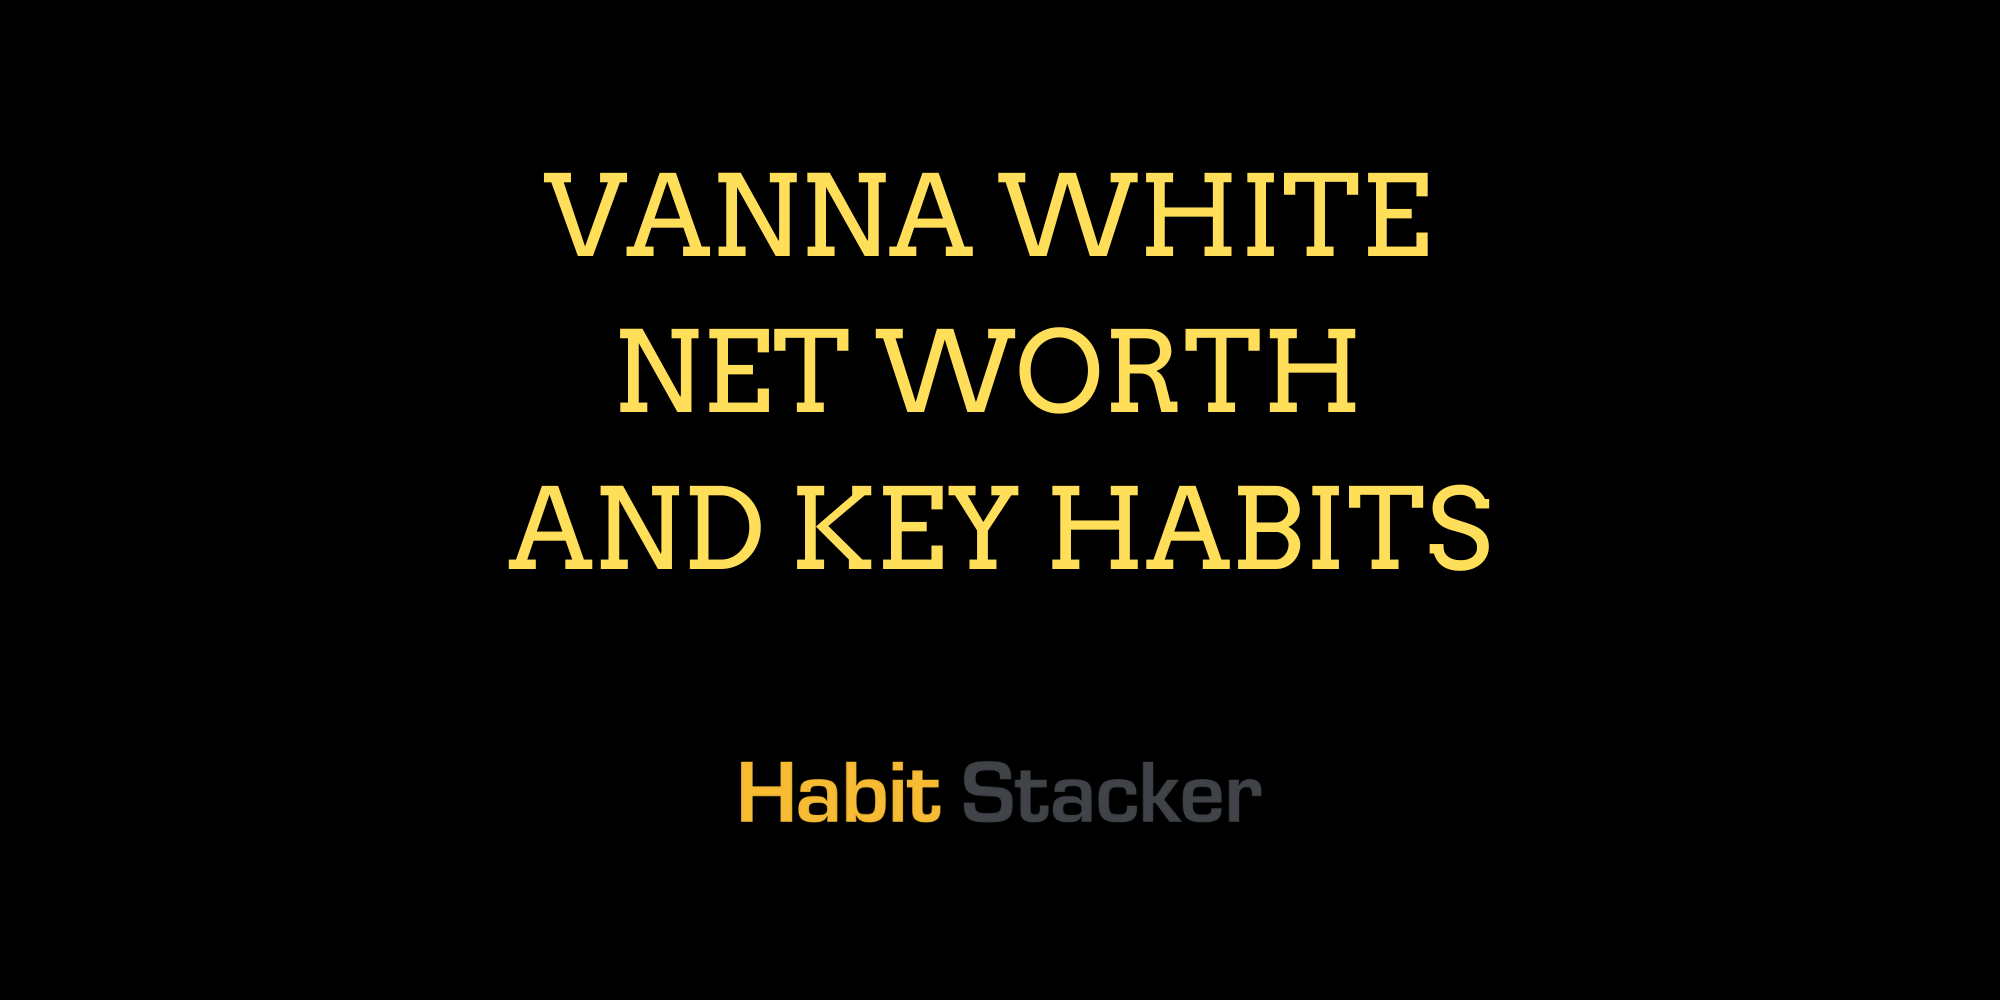 Vanna White Net Worth and Key Habits